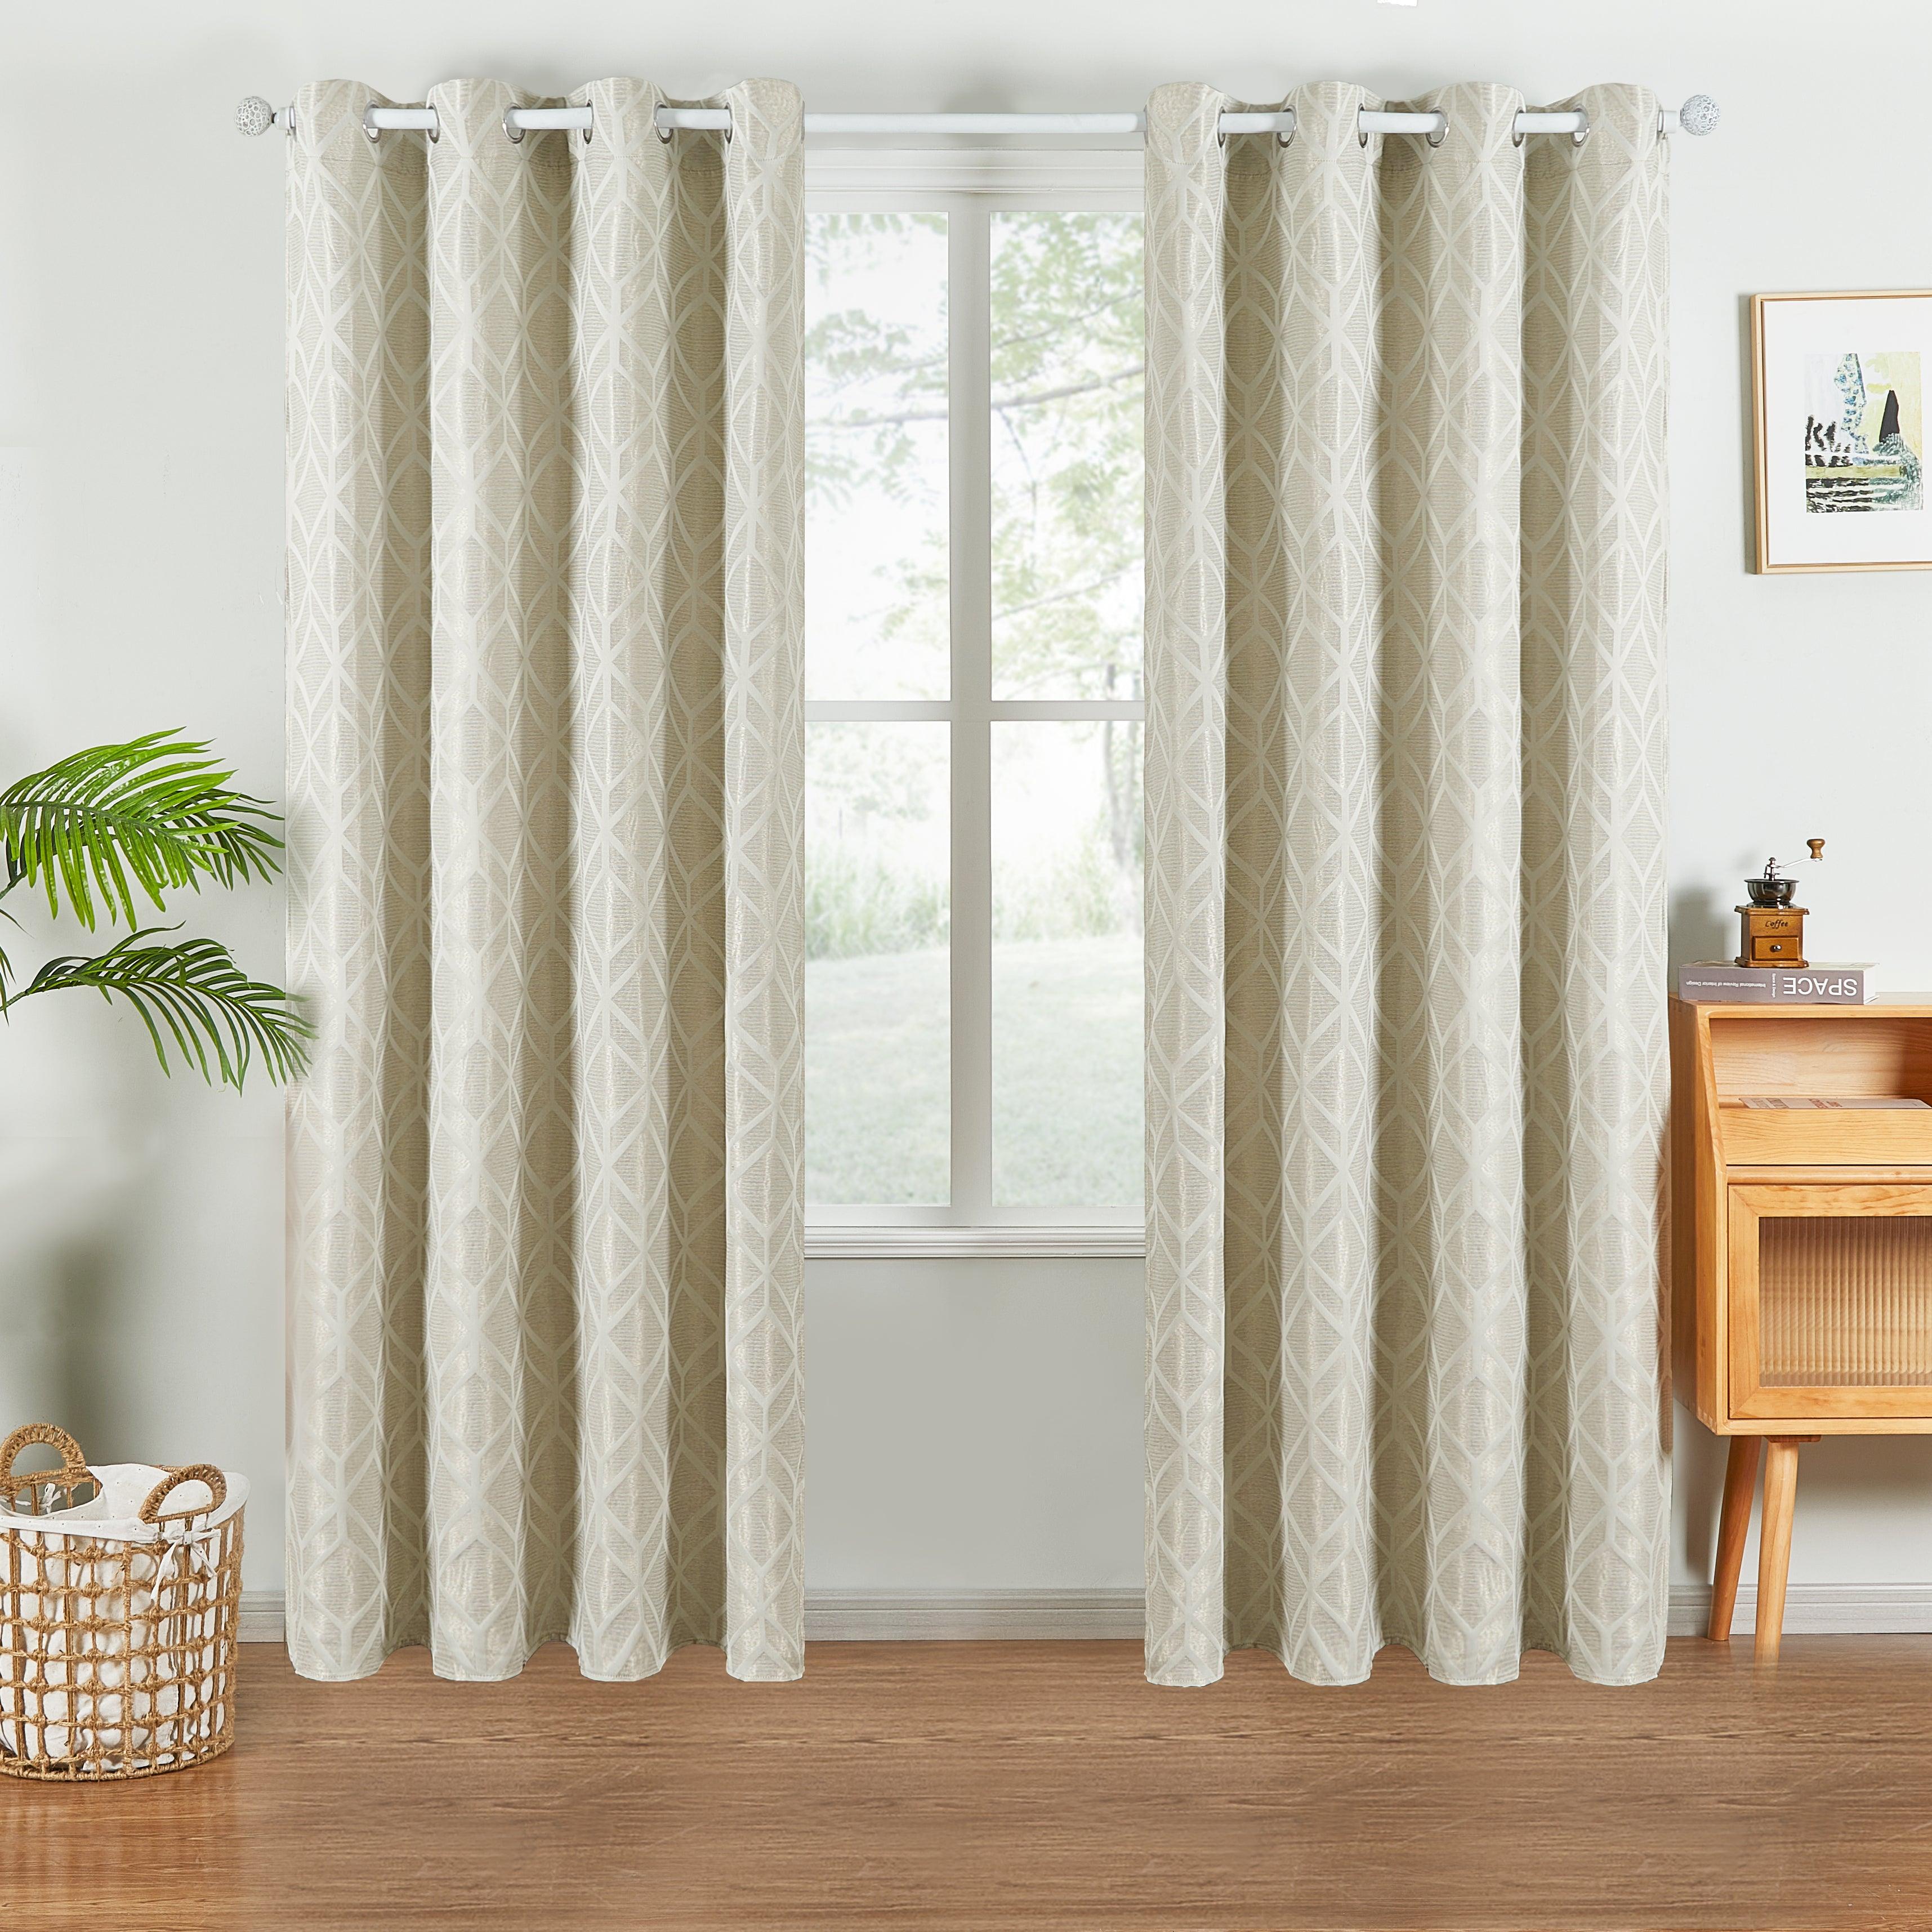 Topfinel Jacquard Room Darkening Curtains for Bedroom Living Room, thermal curtains for winter - Topfinel